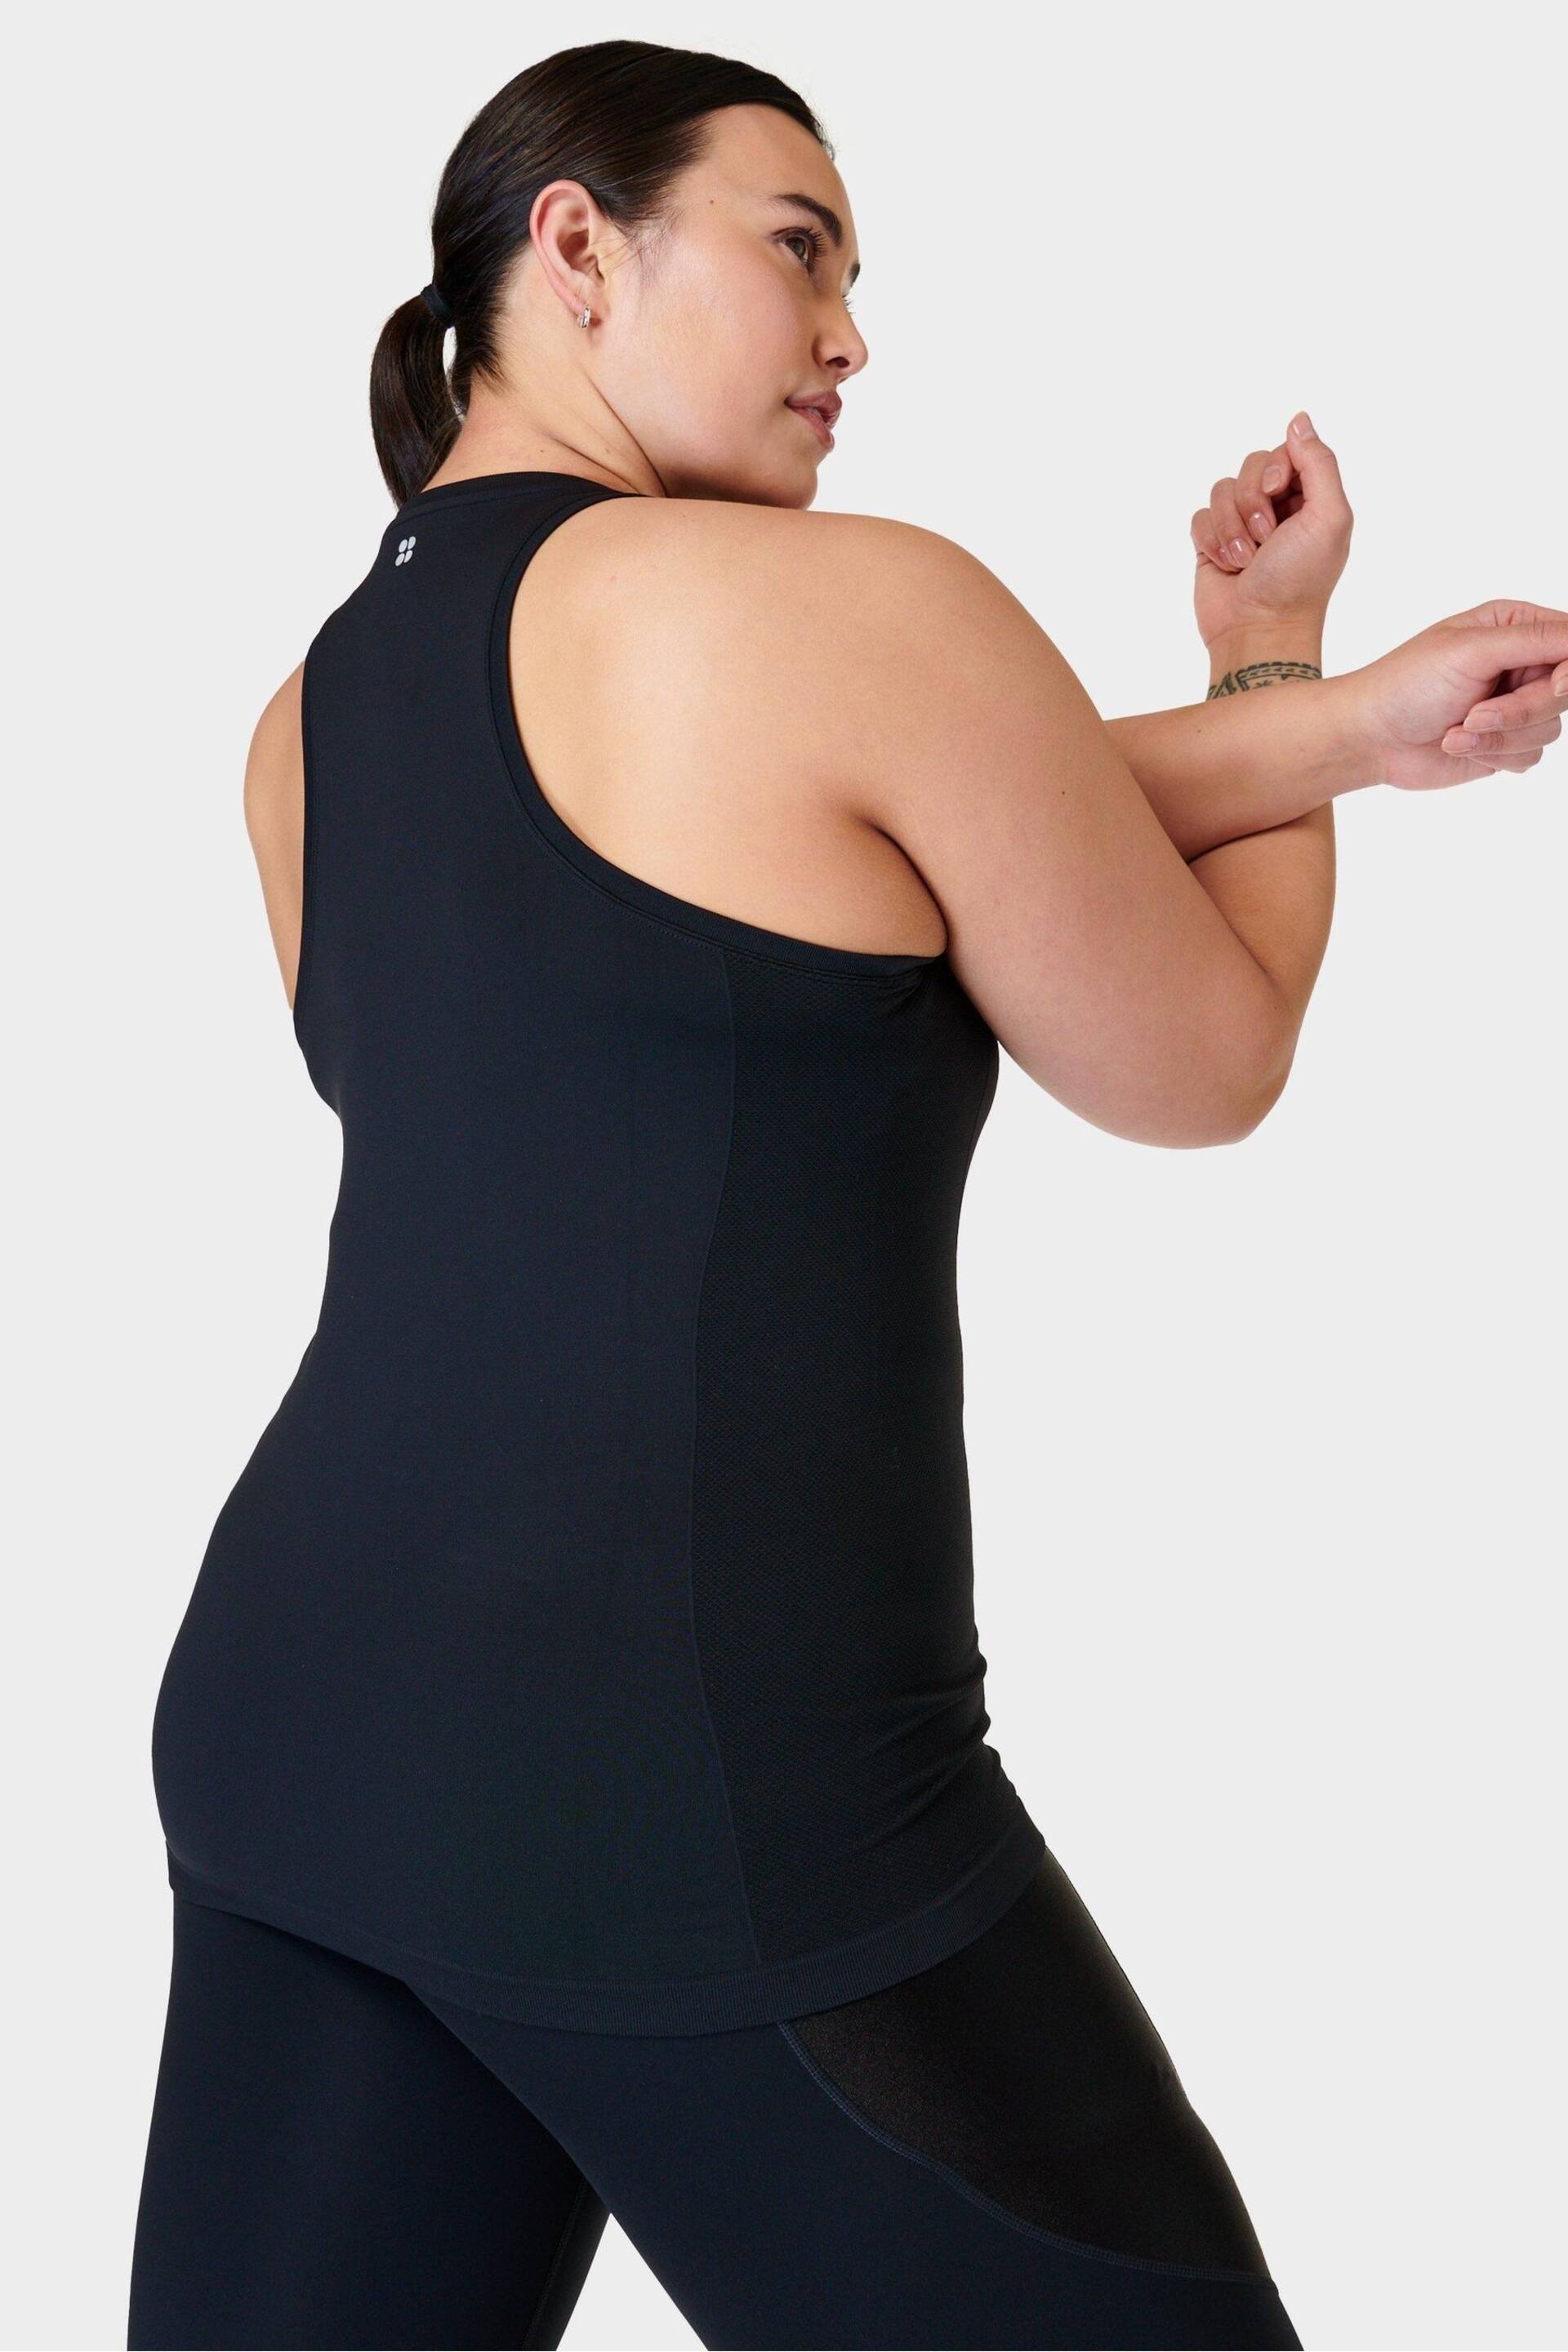 Sweaty Betty Black Athlete Seamless Workout Tank Top - Image 3 of 8